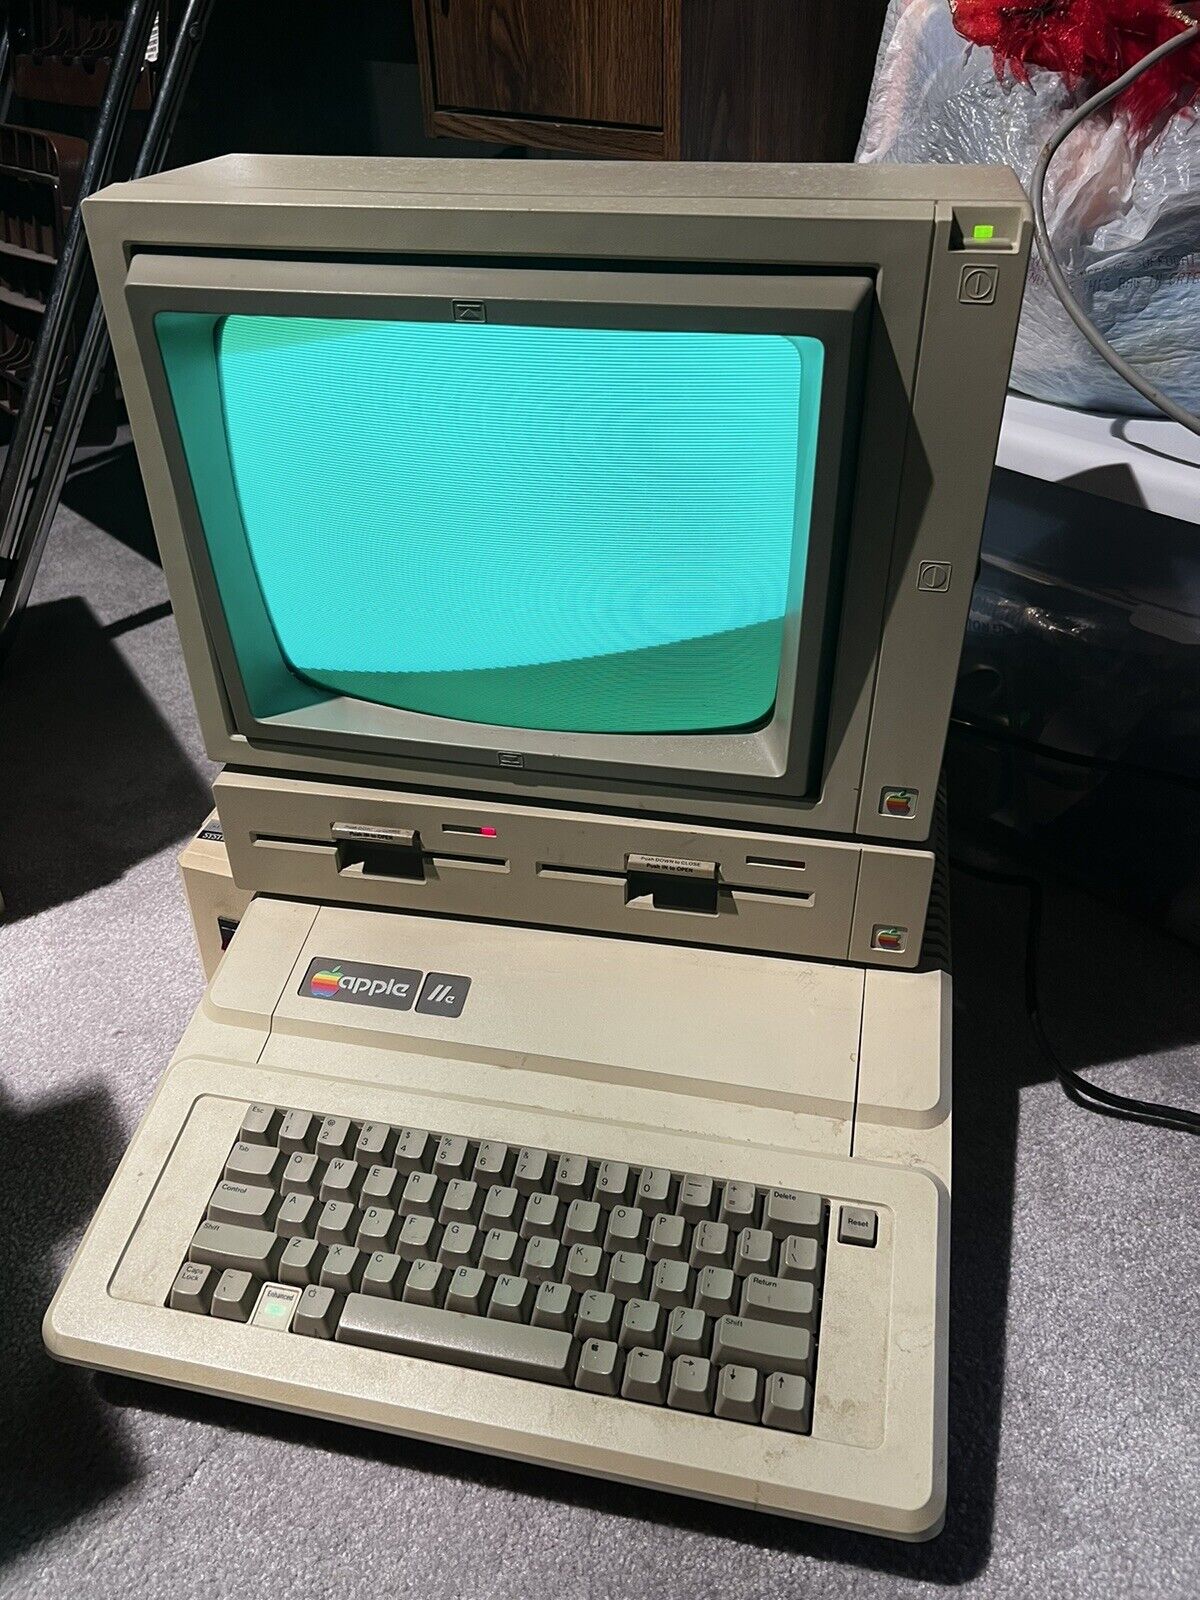 80s Apple iie Computer Image Writer II Printer Original Box Vintage